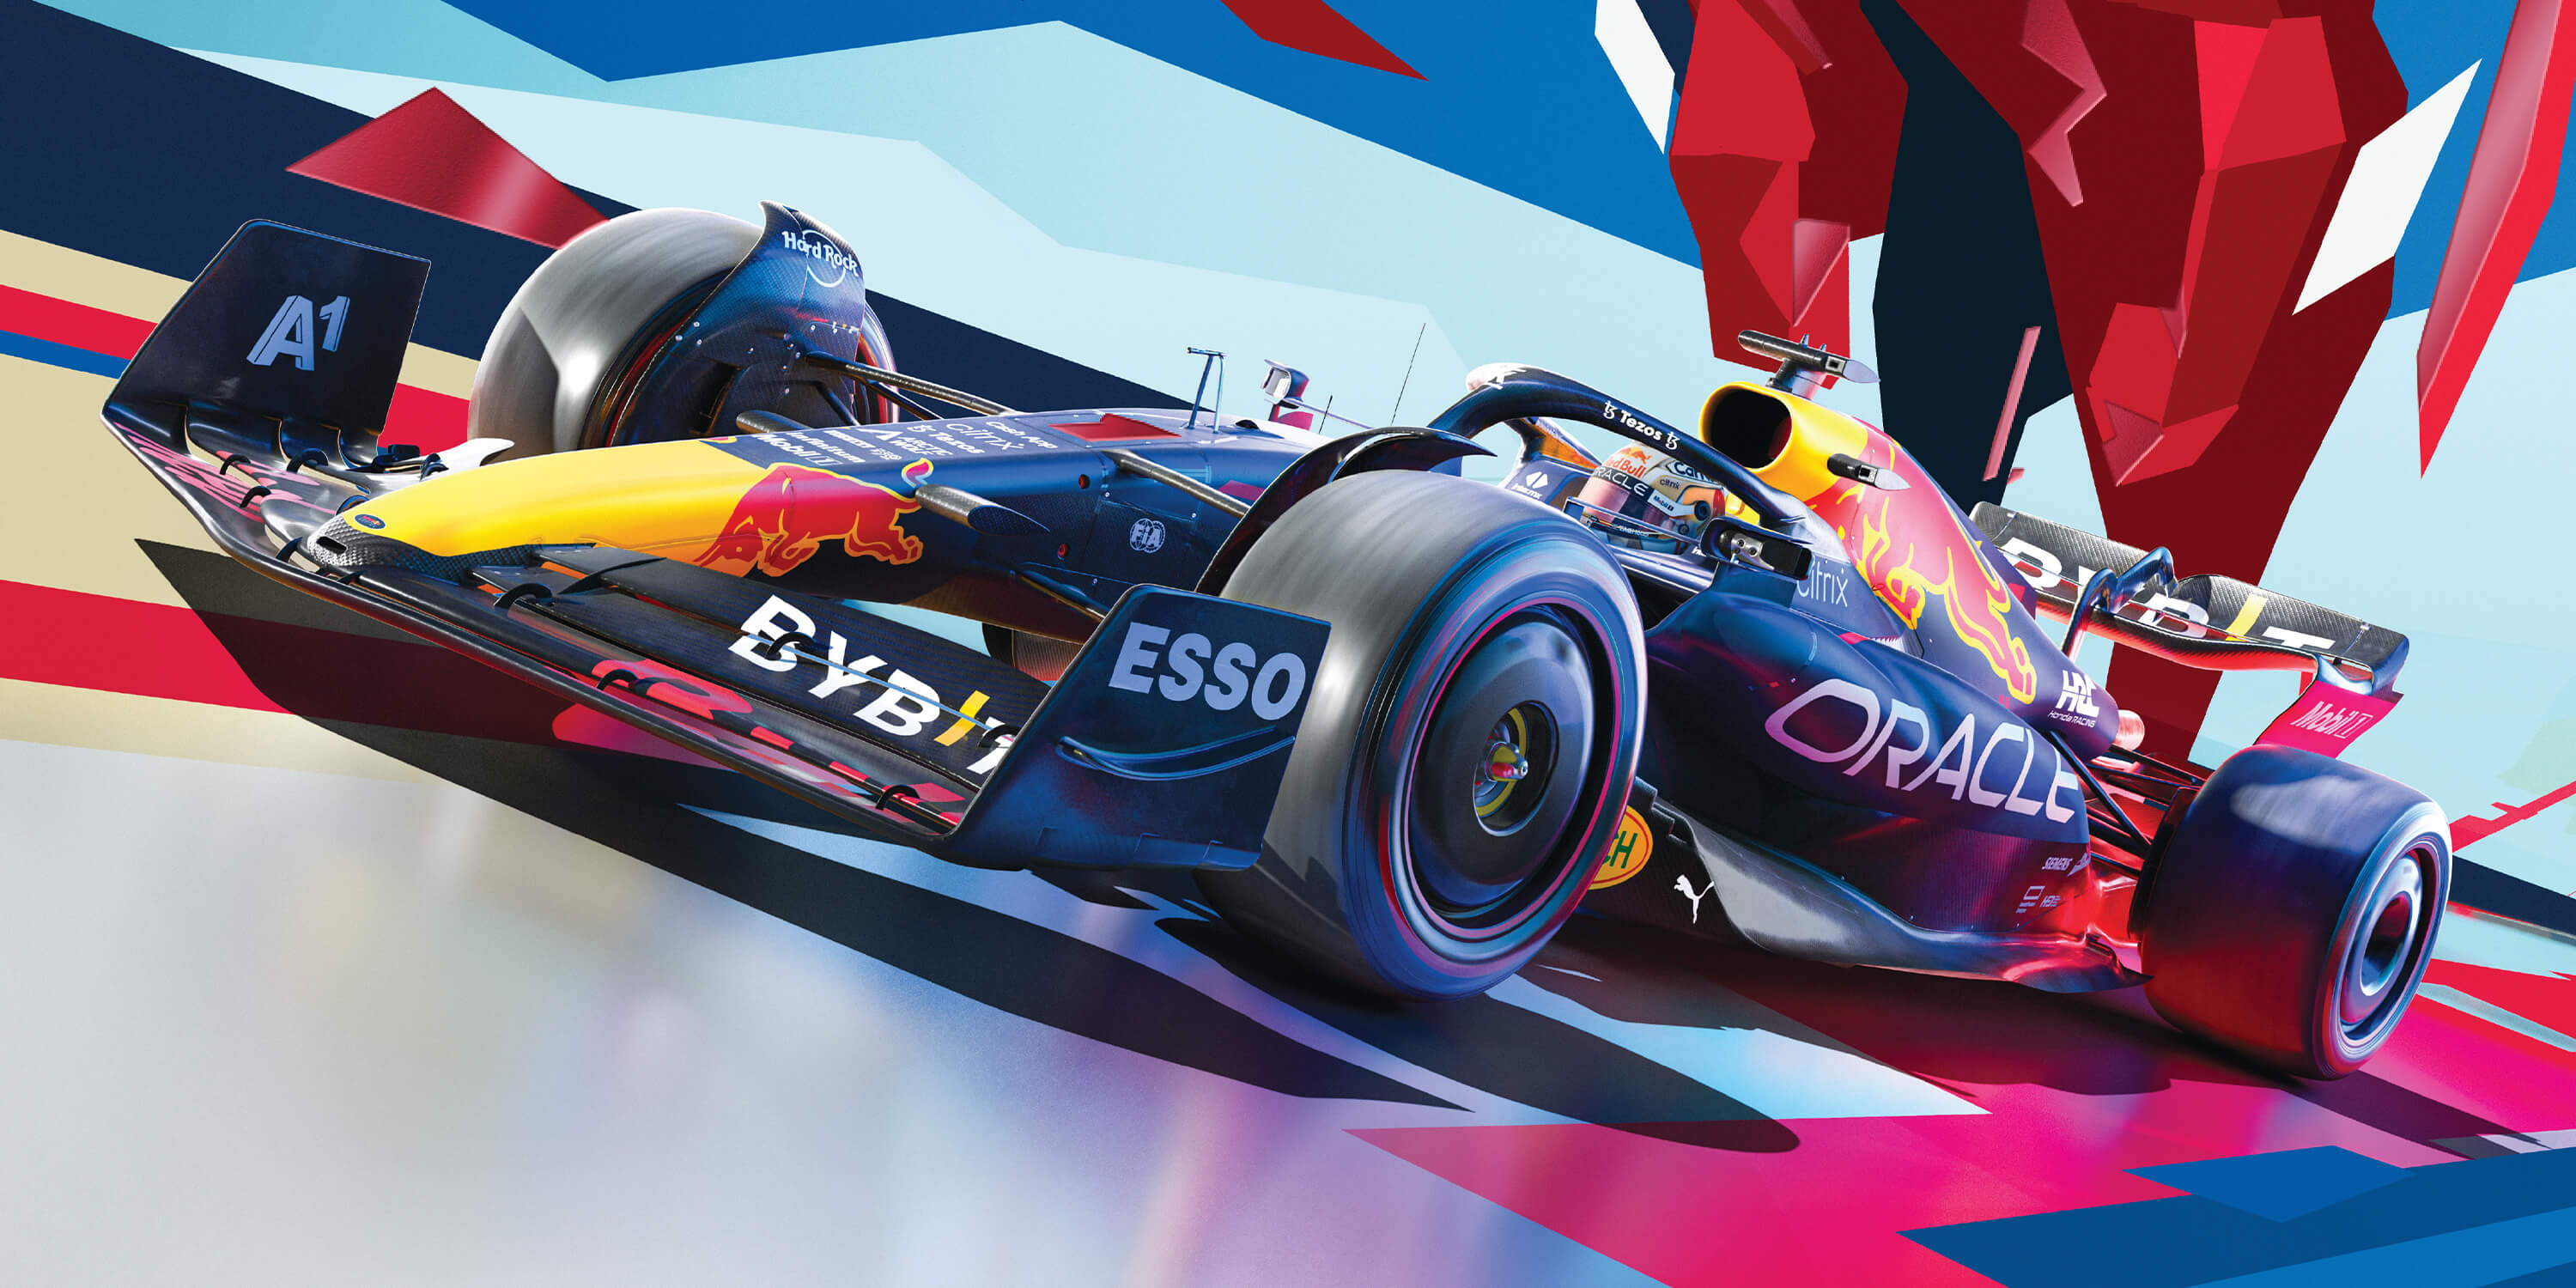 Redbull F1 affiches et impressions par Ford Art - Printler